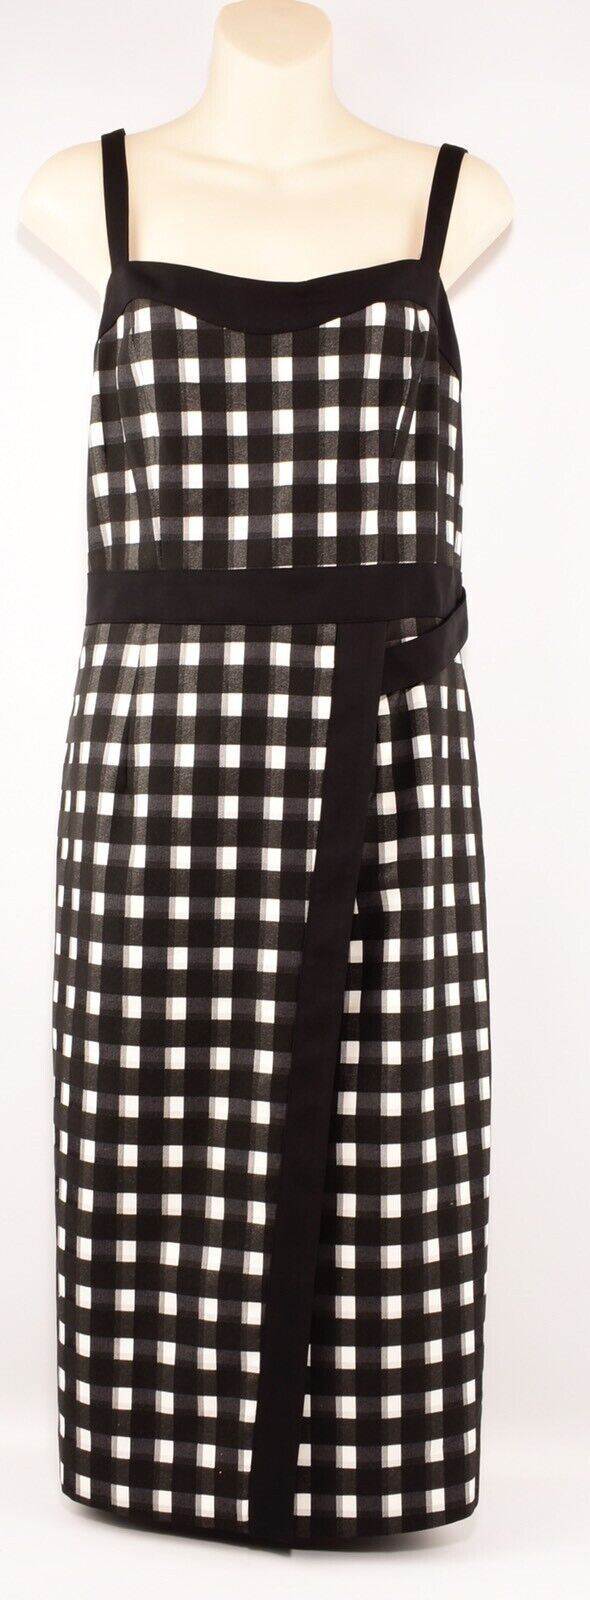 MARIA GRAZIA SEVERI Women's Black Checked Midi Dress, size UK 18 / IT 50